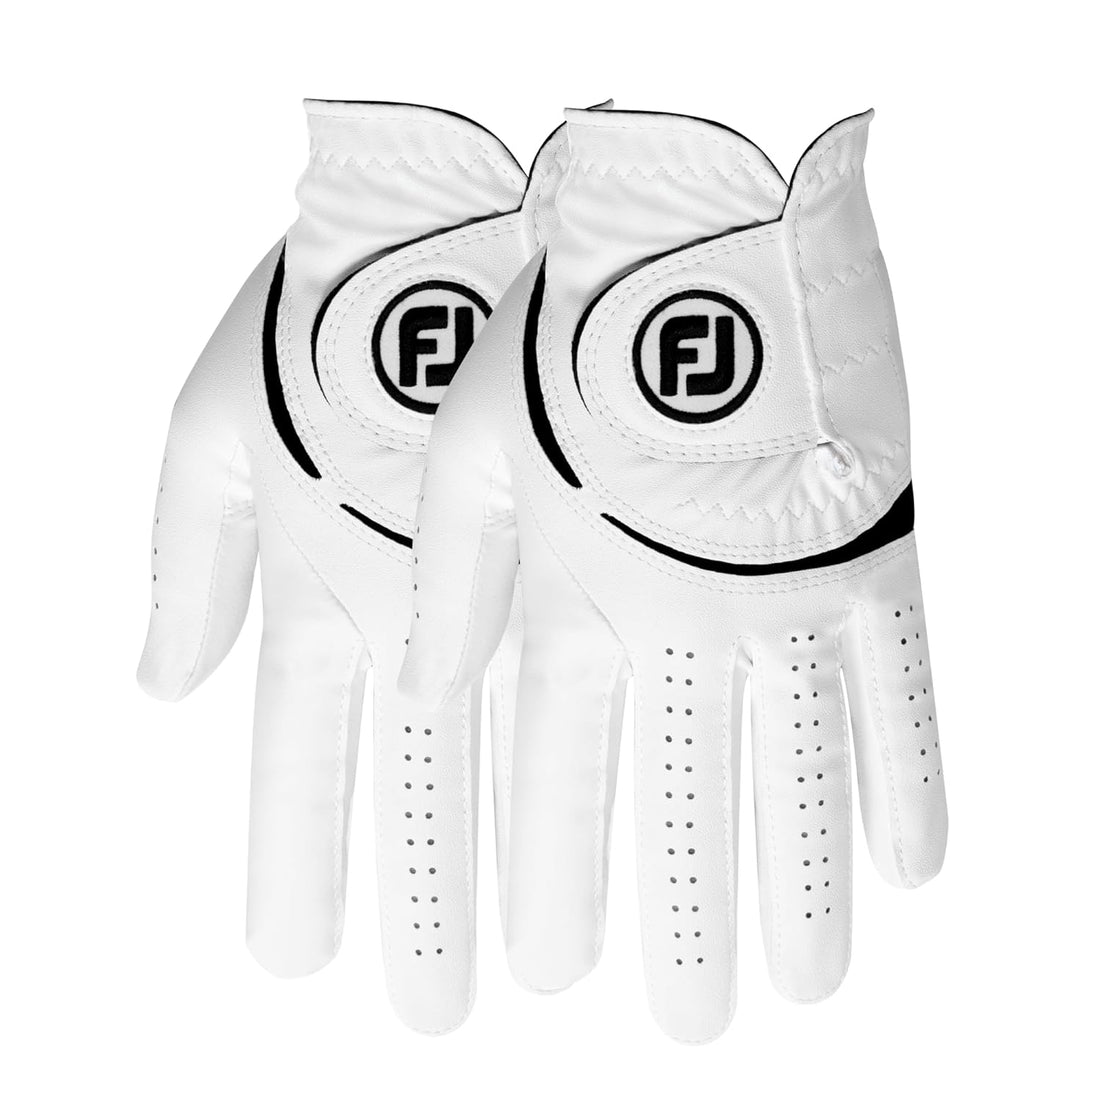 FootJoy Men's WeatherSof 2-Pack Golf Glove, White, Cadet Large, Worn on Left Hand